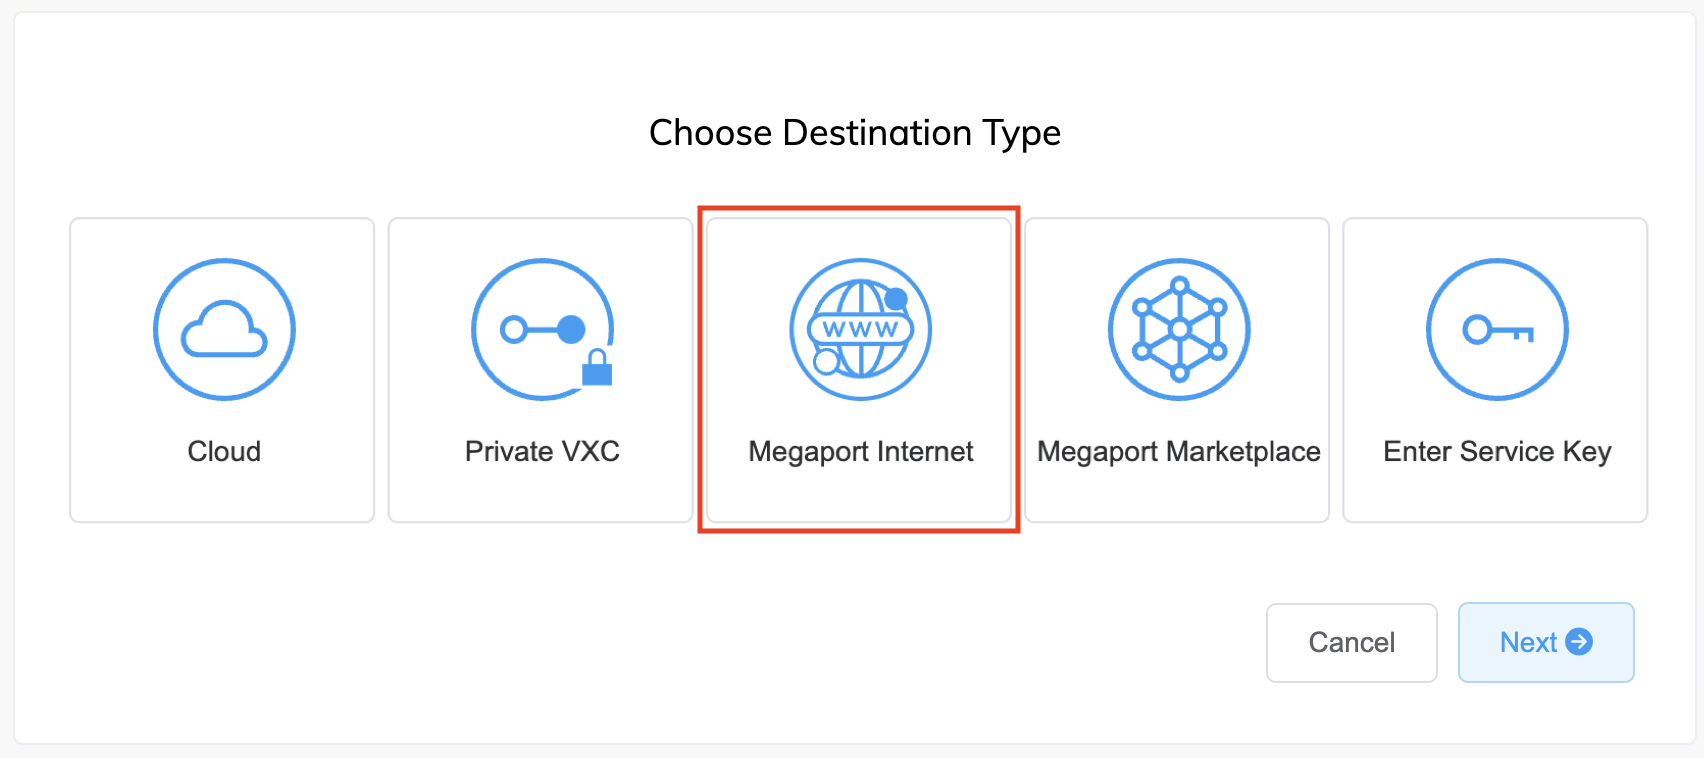 Megaport Internet 接続